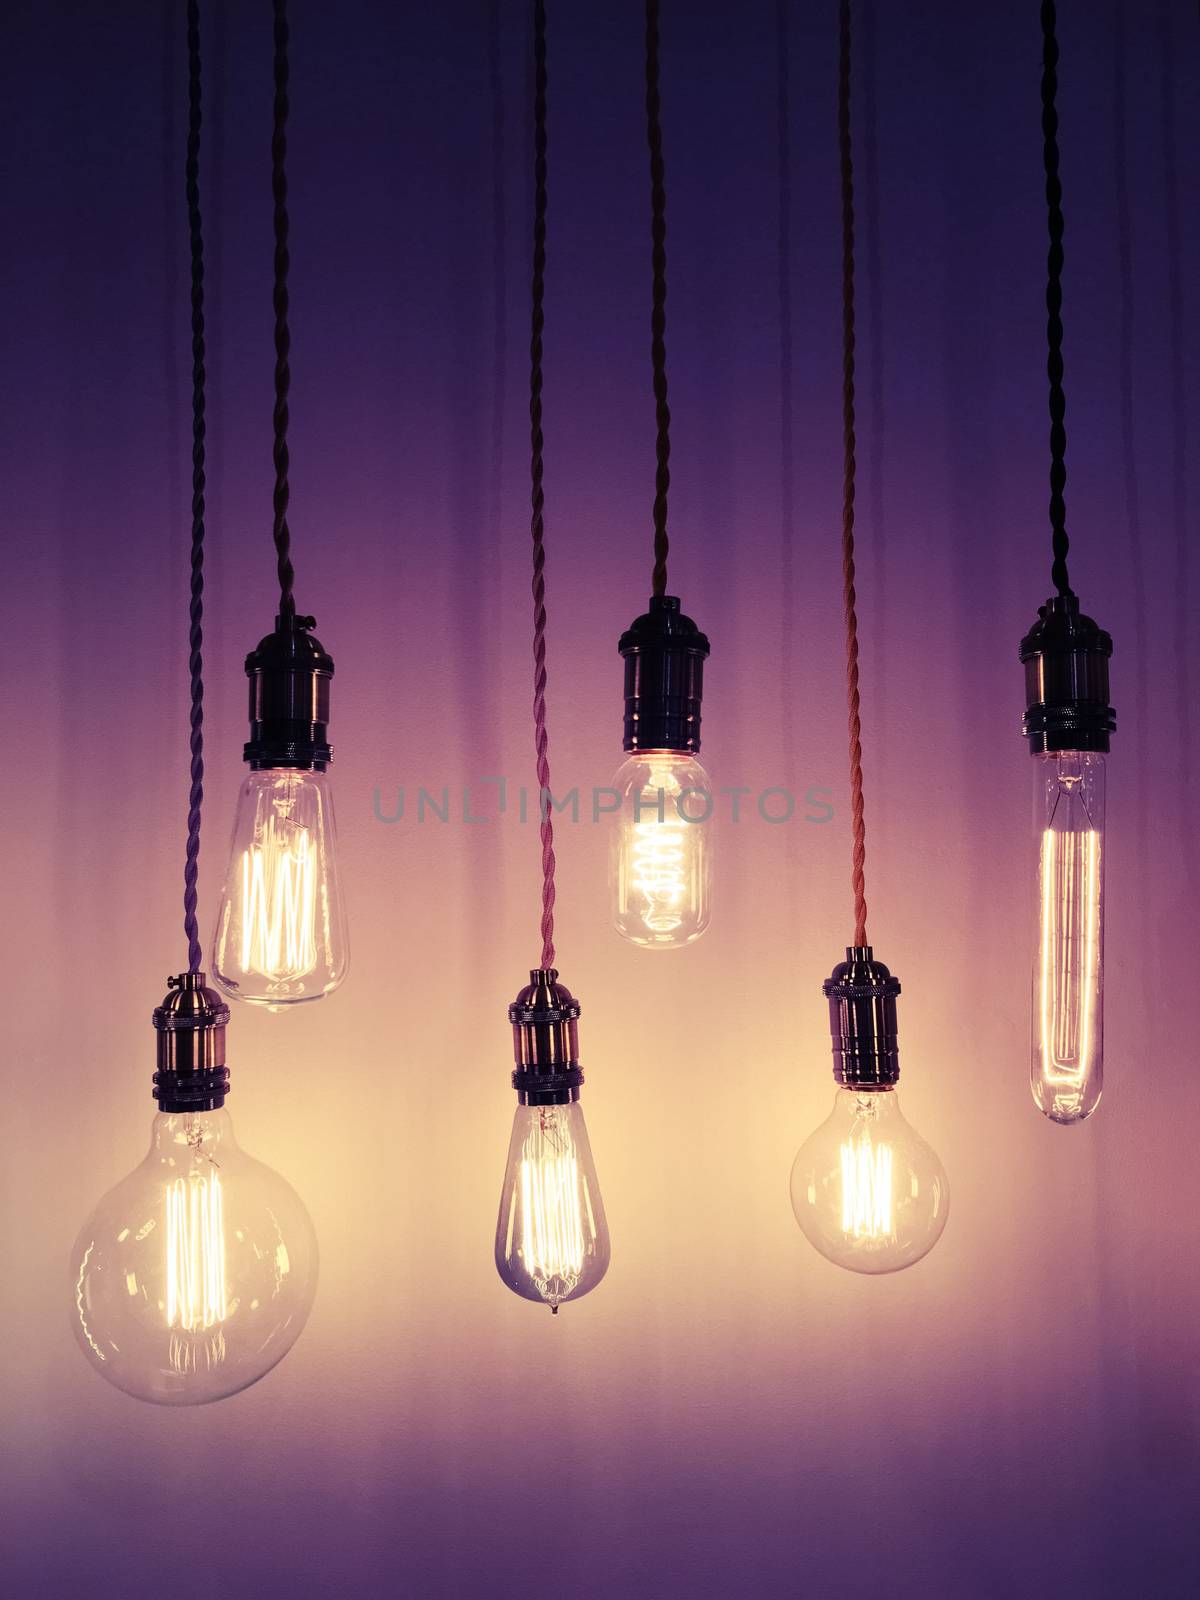 Industrial style light bulbs on purple background by anikasalsera